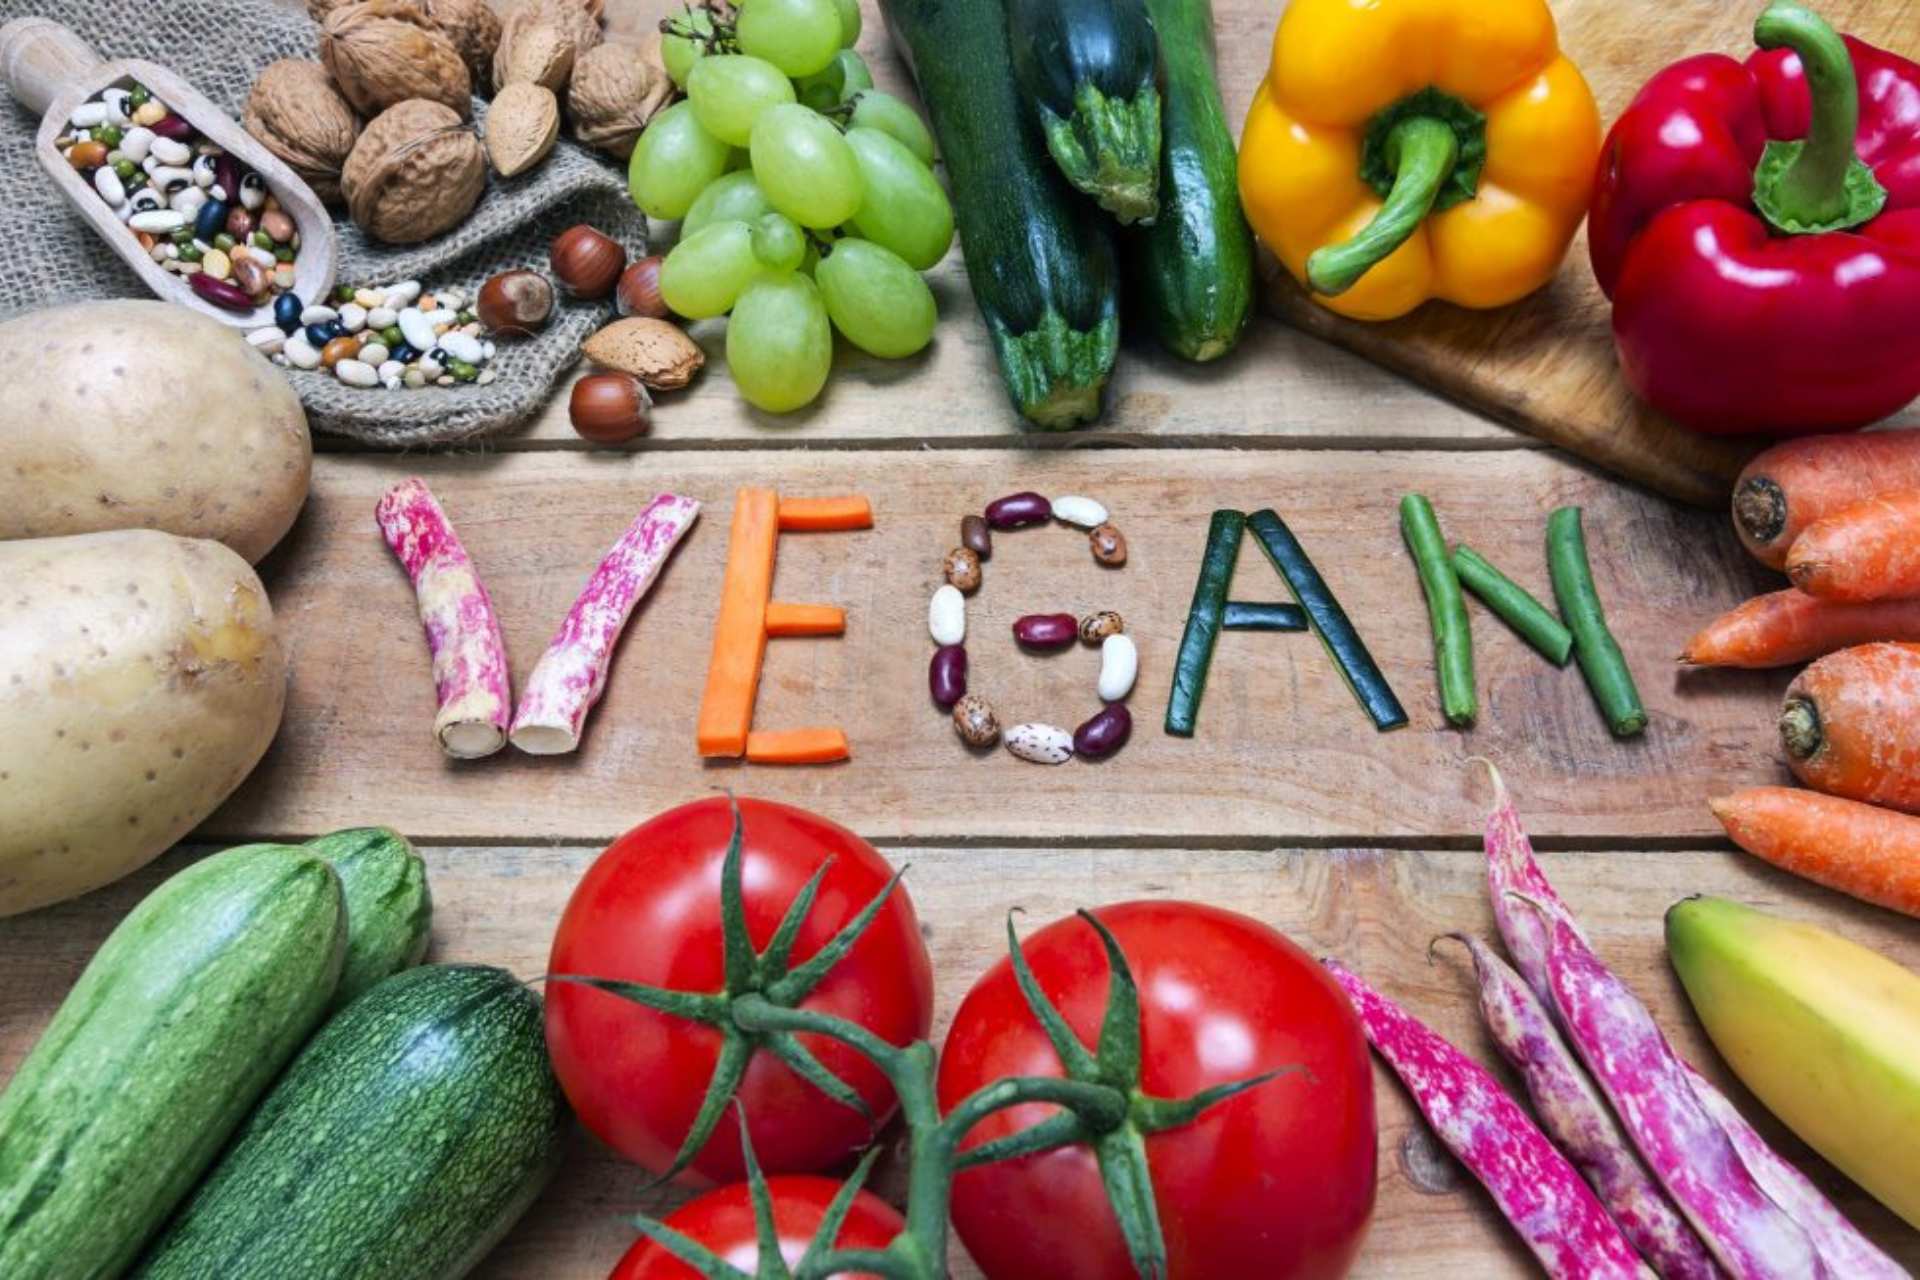 Top 8 Tips for Going Vegan